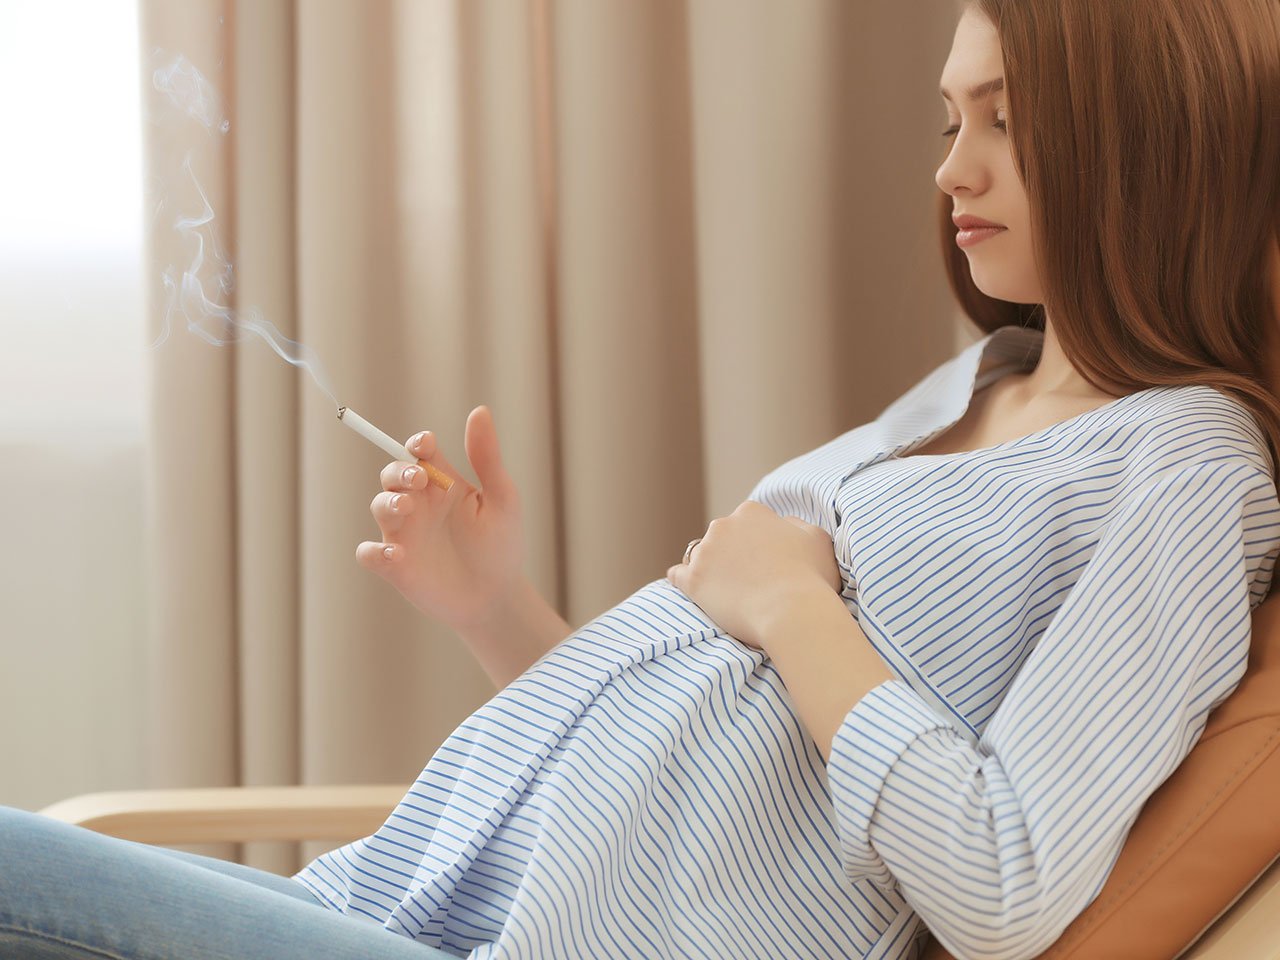 smoking while being pregnant